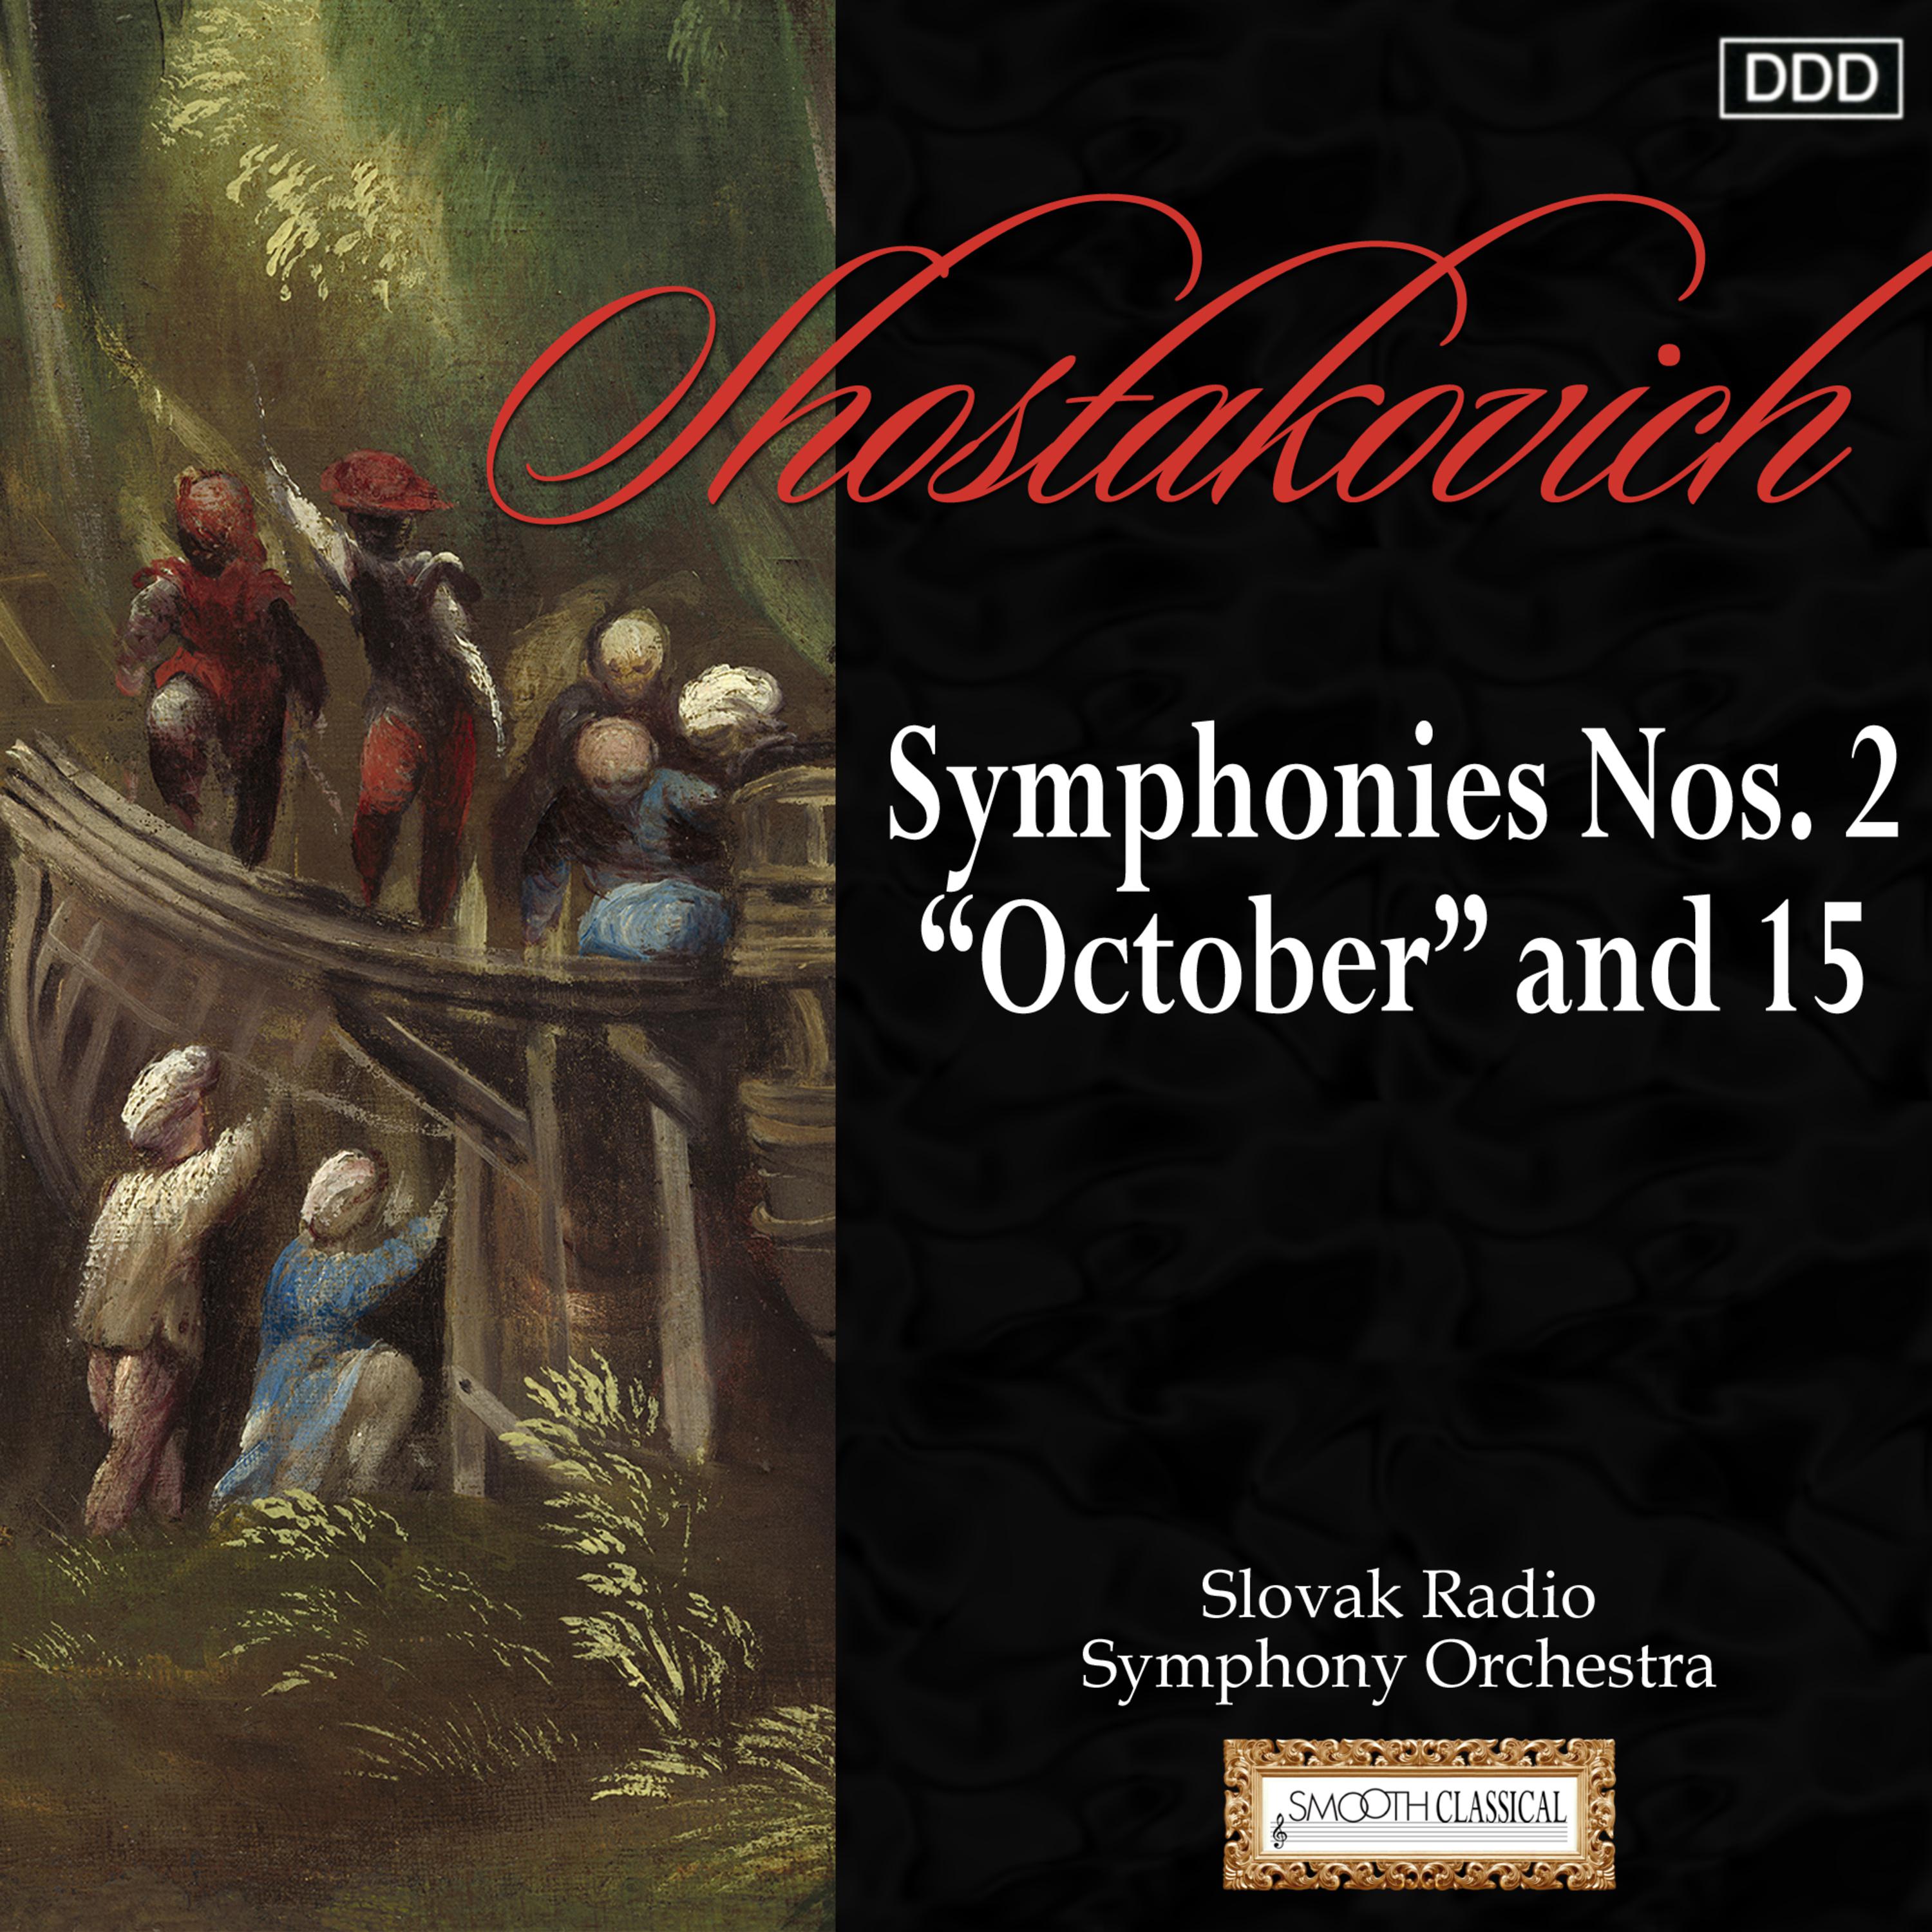 Shostakovich: Symphonies Nos. 2 "October" and 15